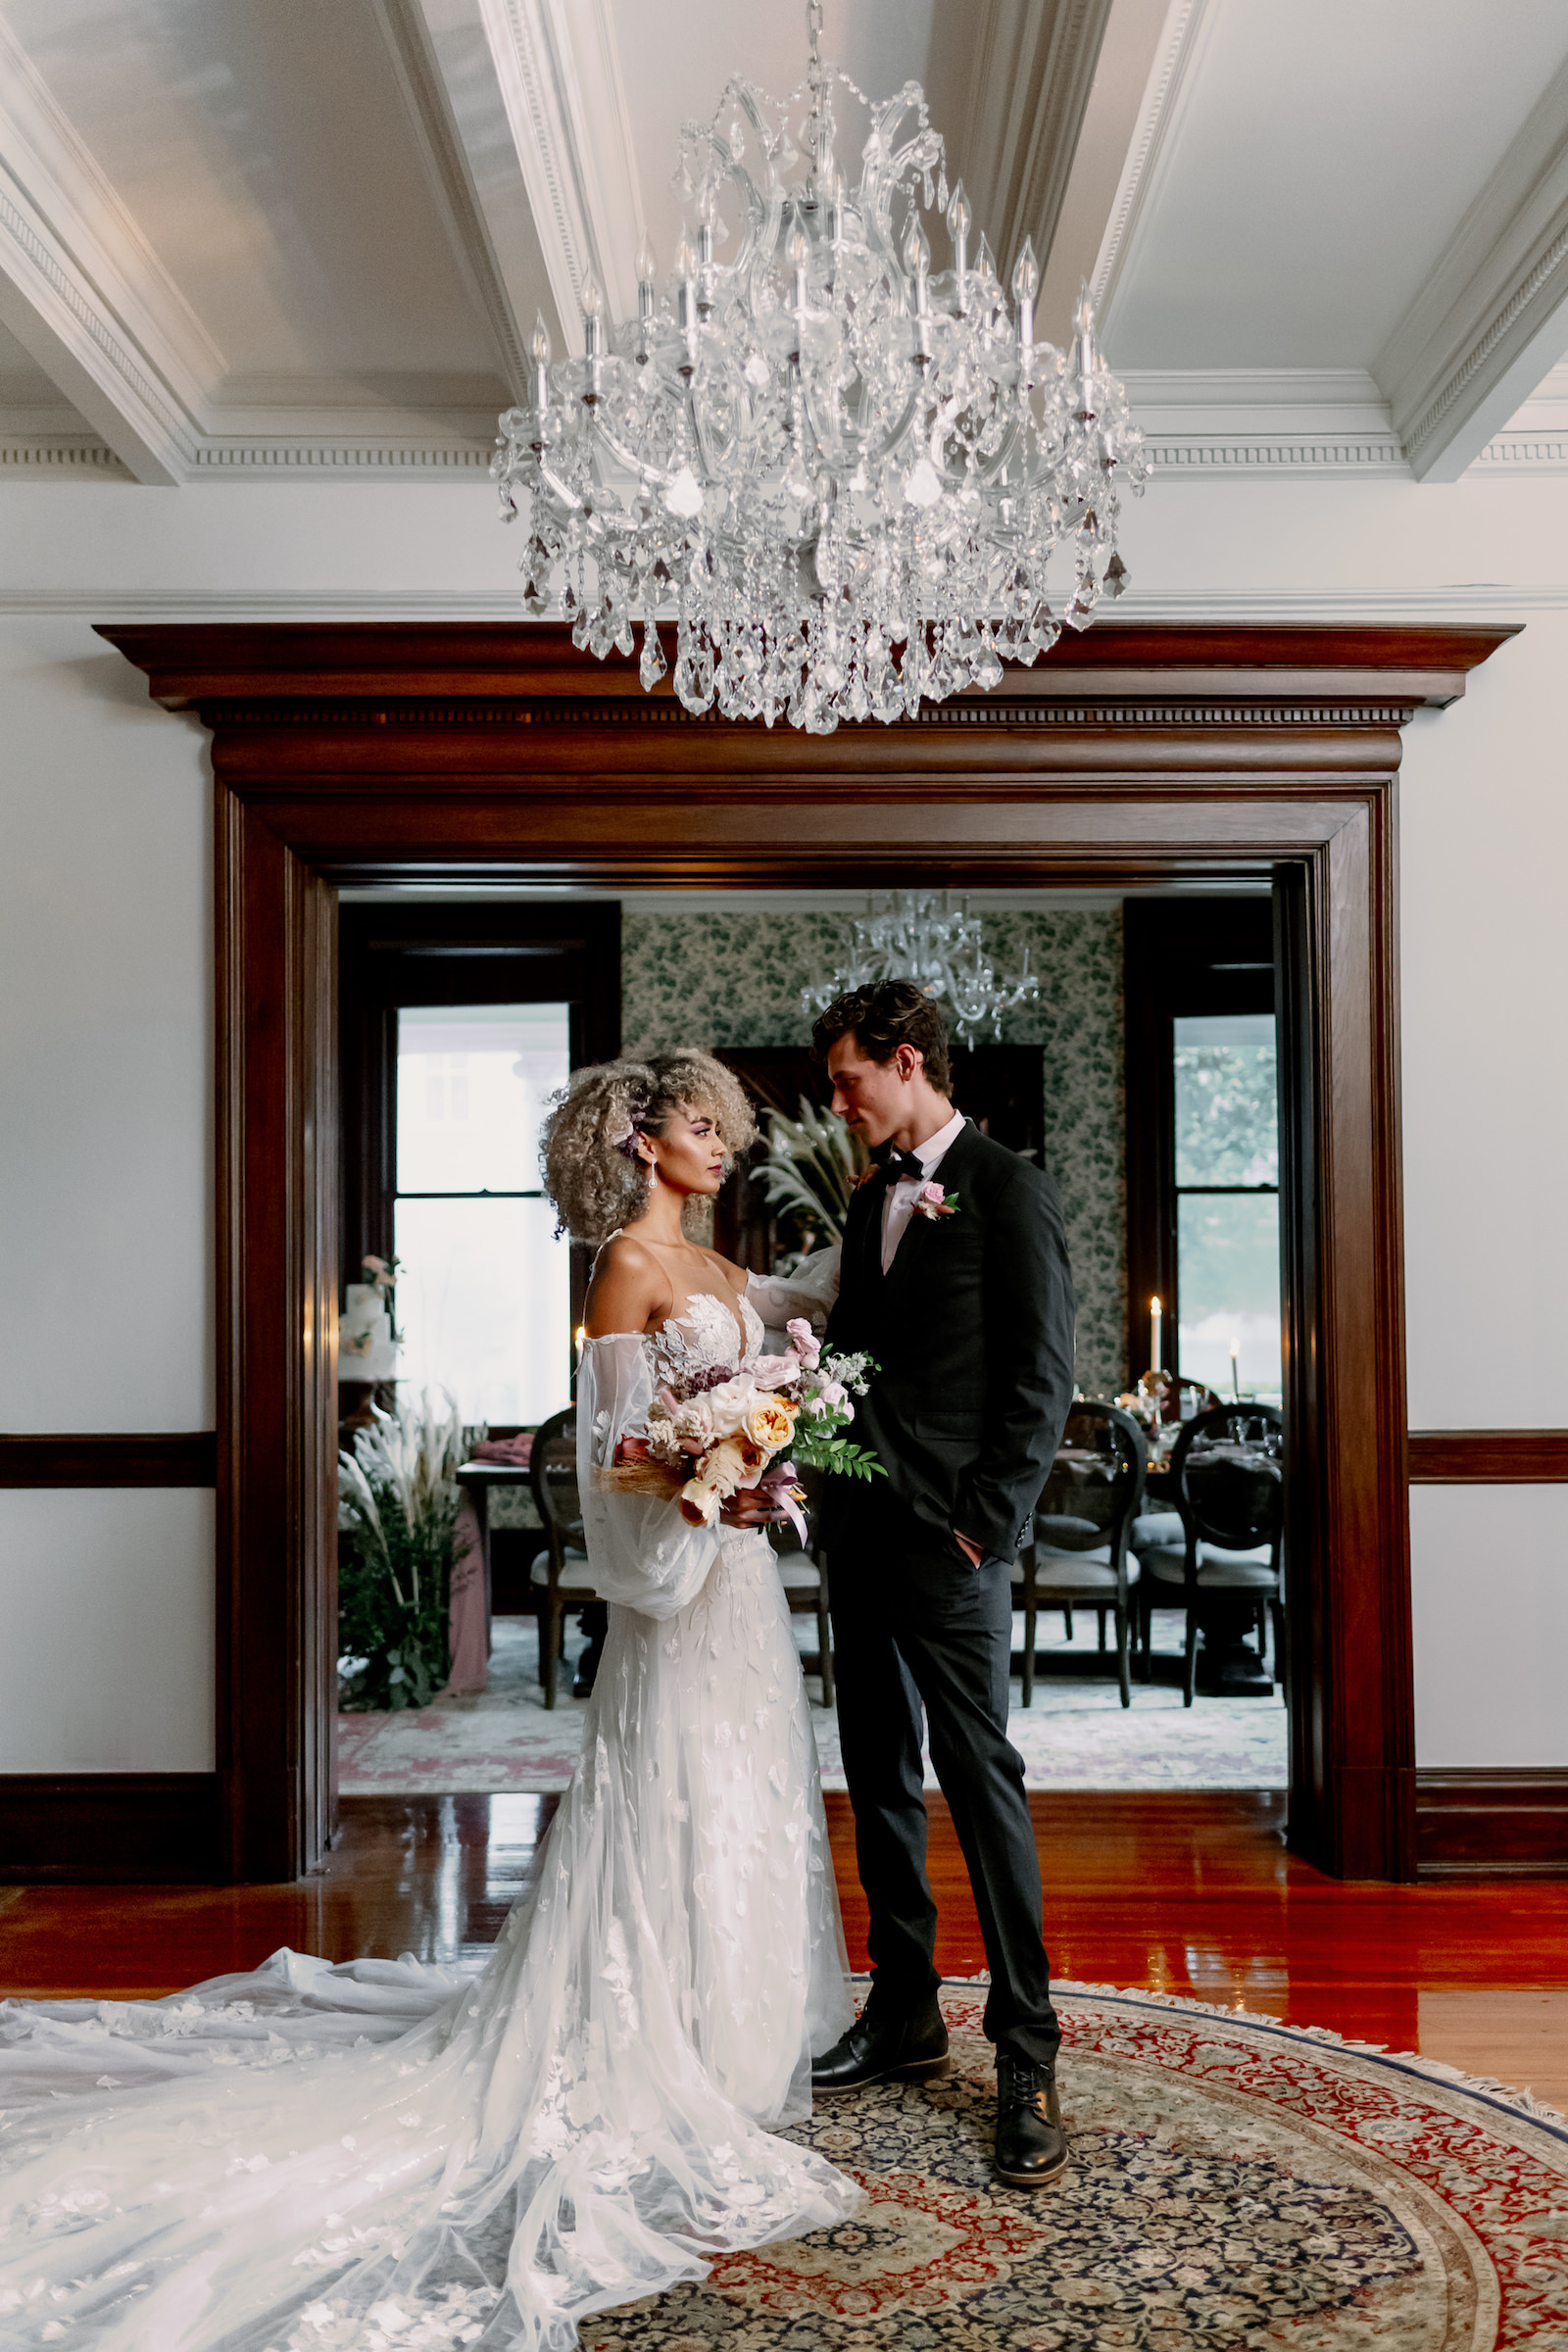 Vintage European Bride and Groom Wedding Portrait | Tampa Bay Wedding Photographer Dewitt for Love | Historic Wedding Venue Anderson House Tampa